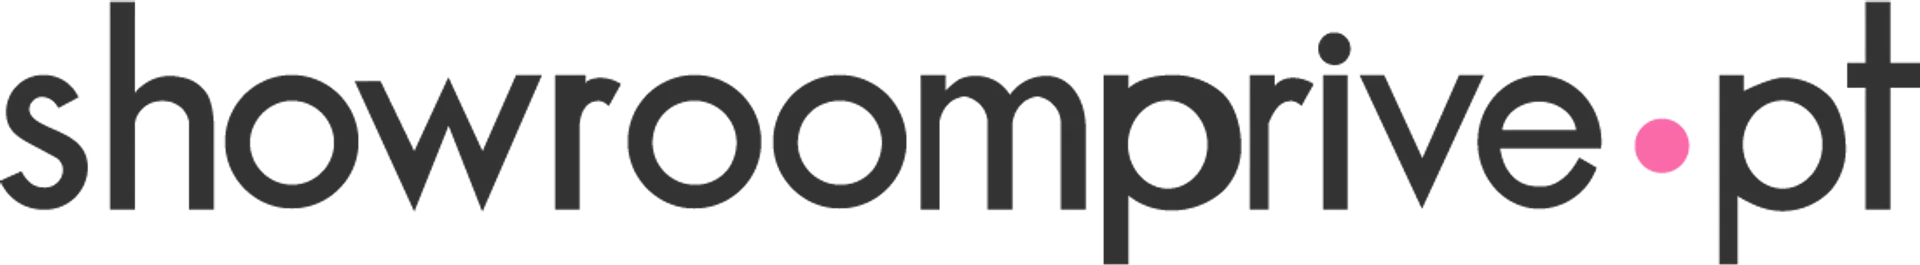 Showroomprive.pt logo